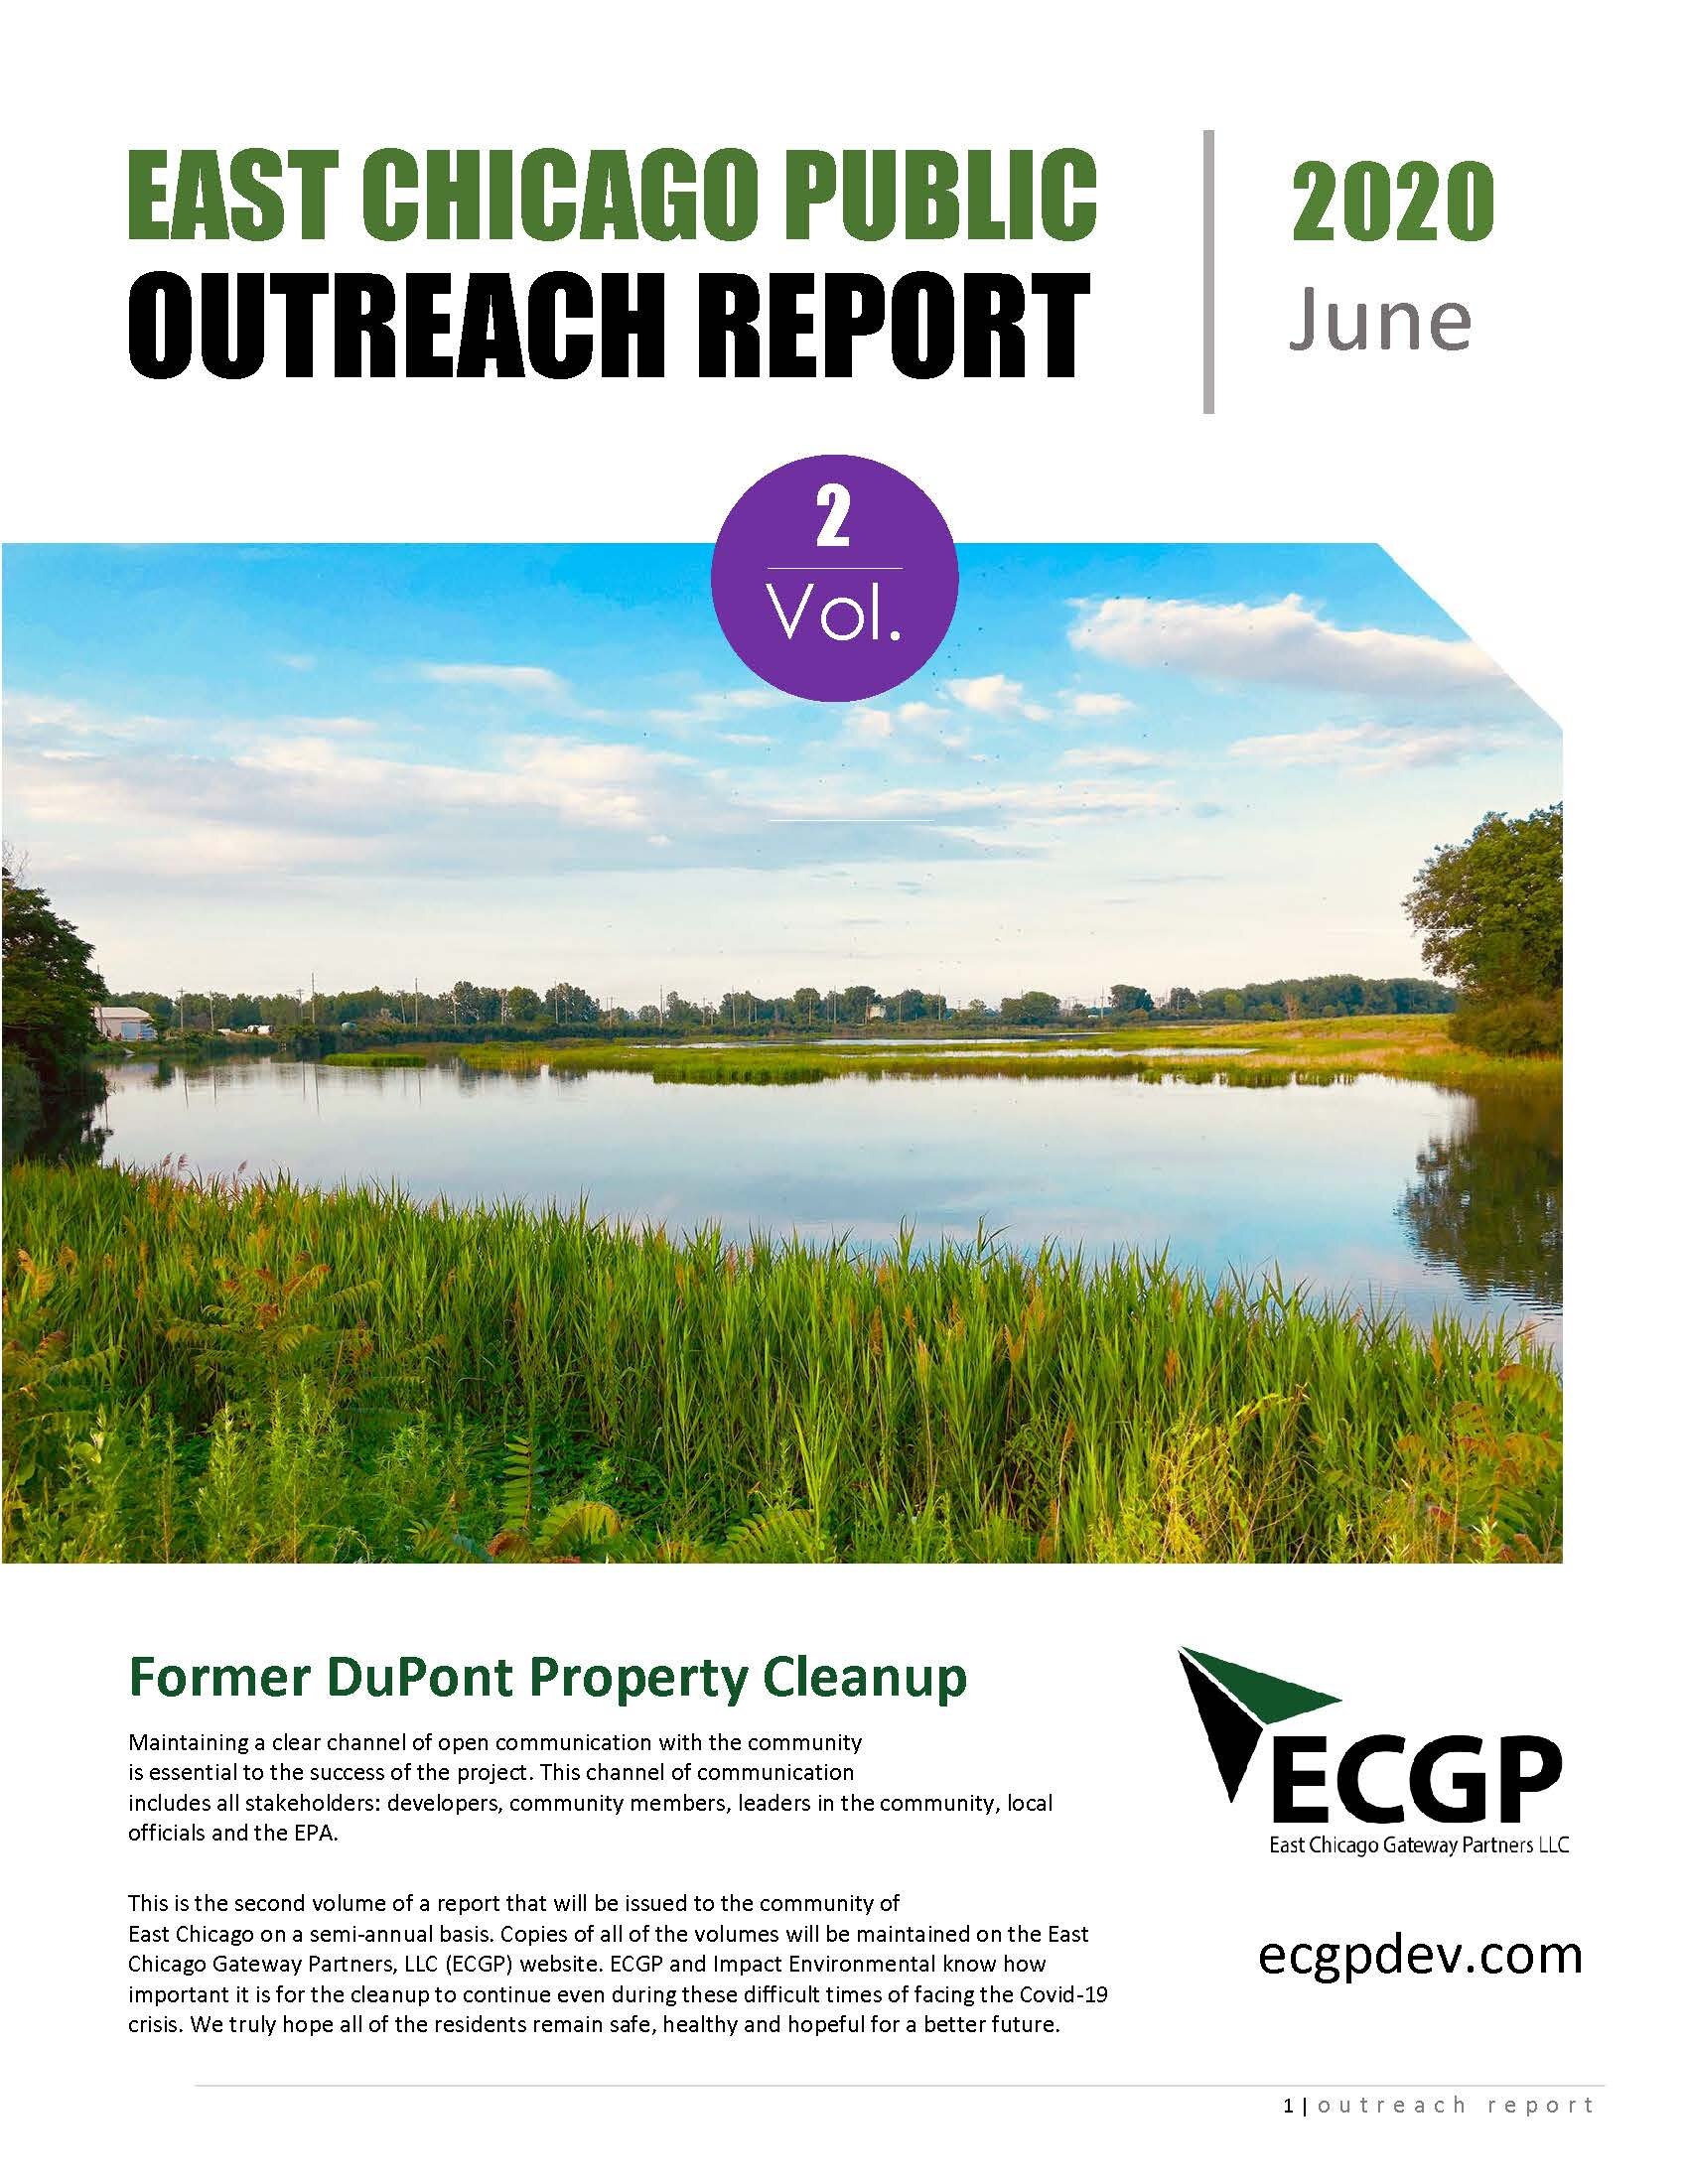 Public Outreach Report - June 2020